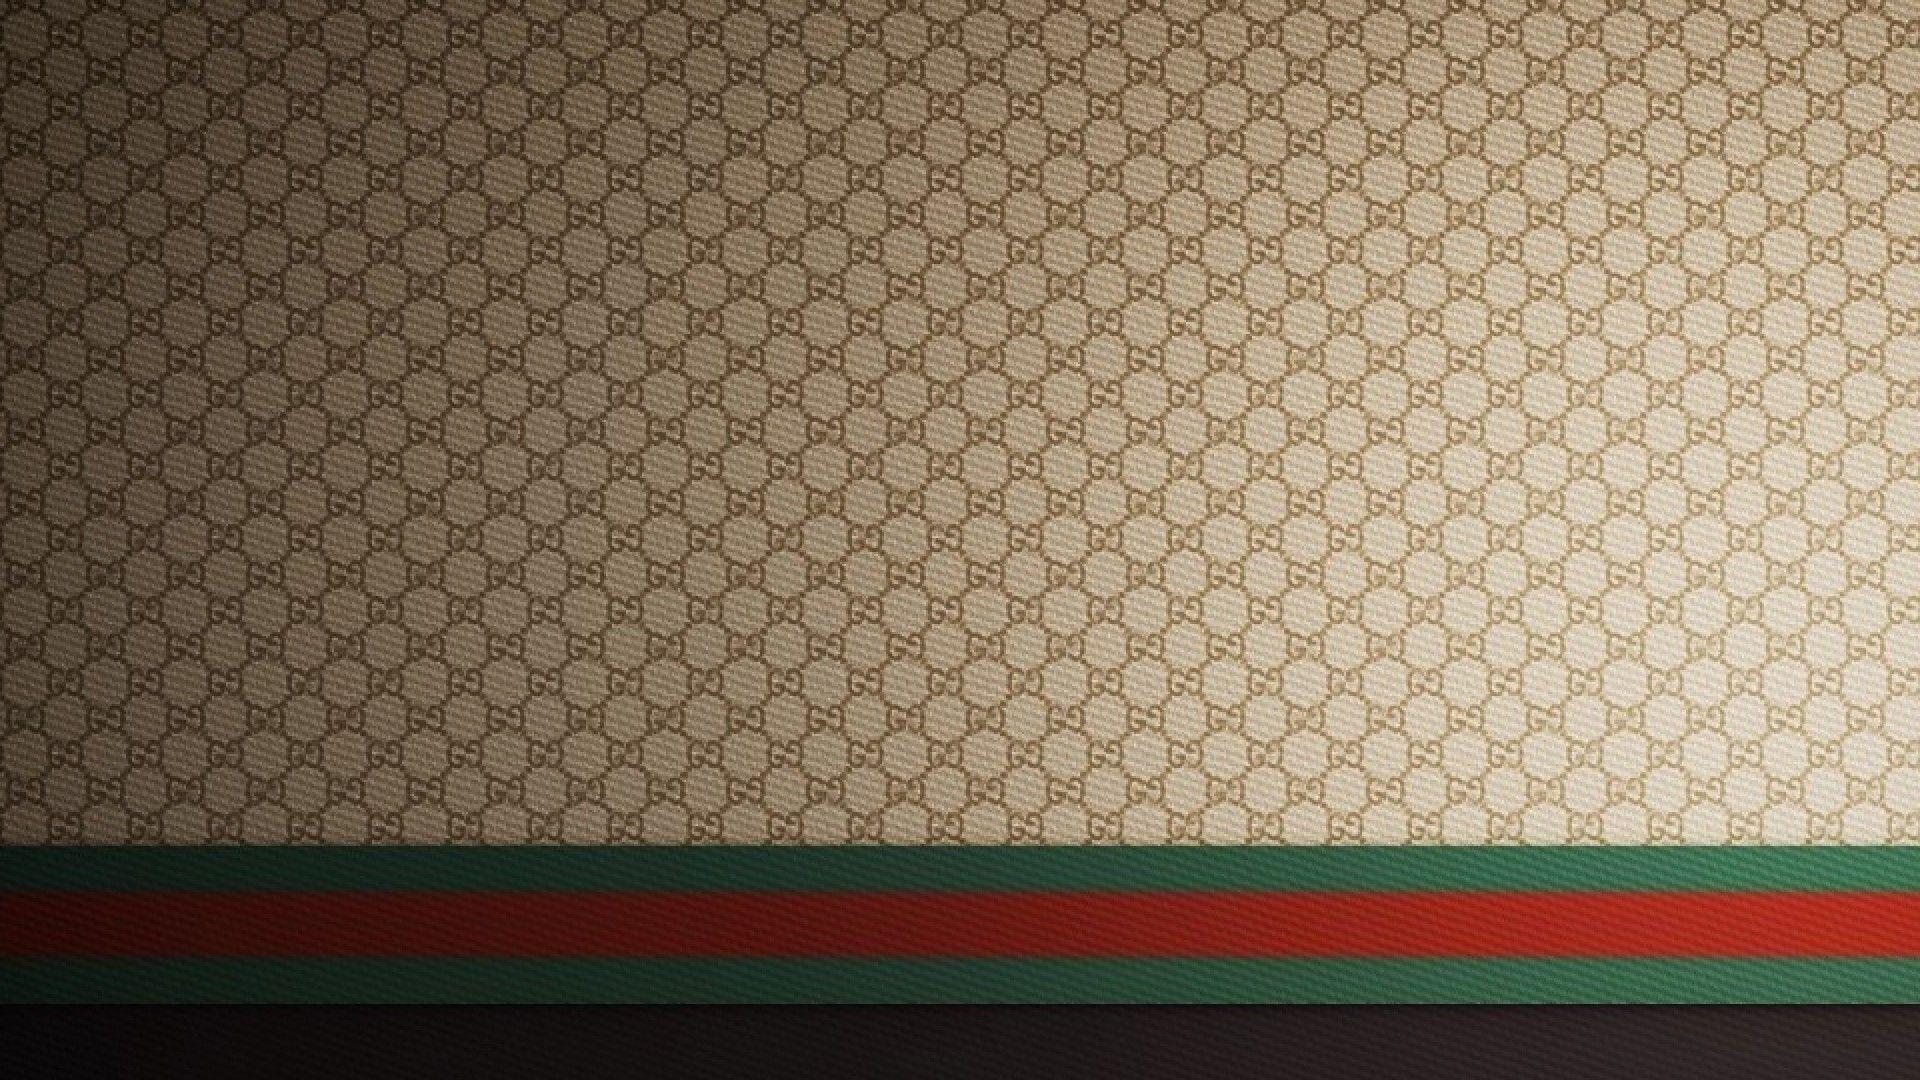 Gucci wallpaper HD free download. Design